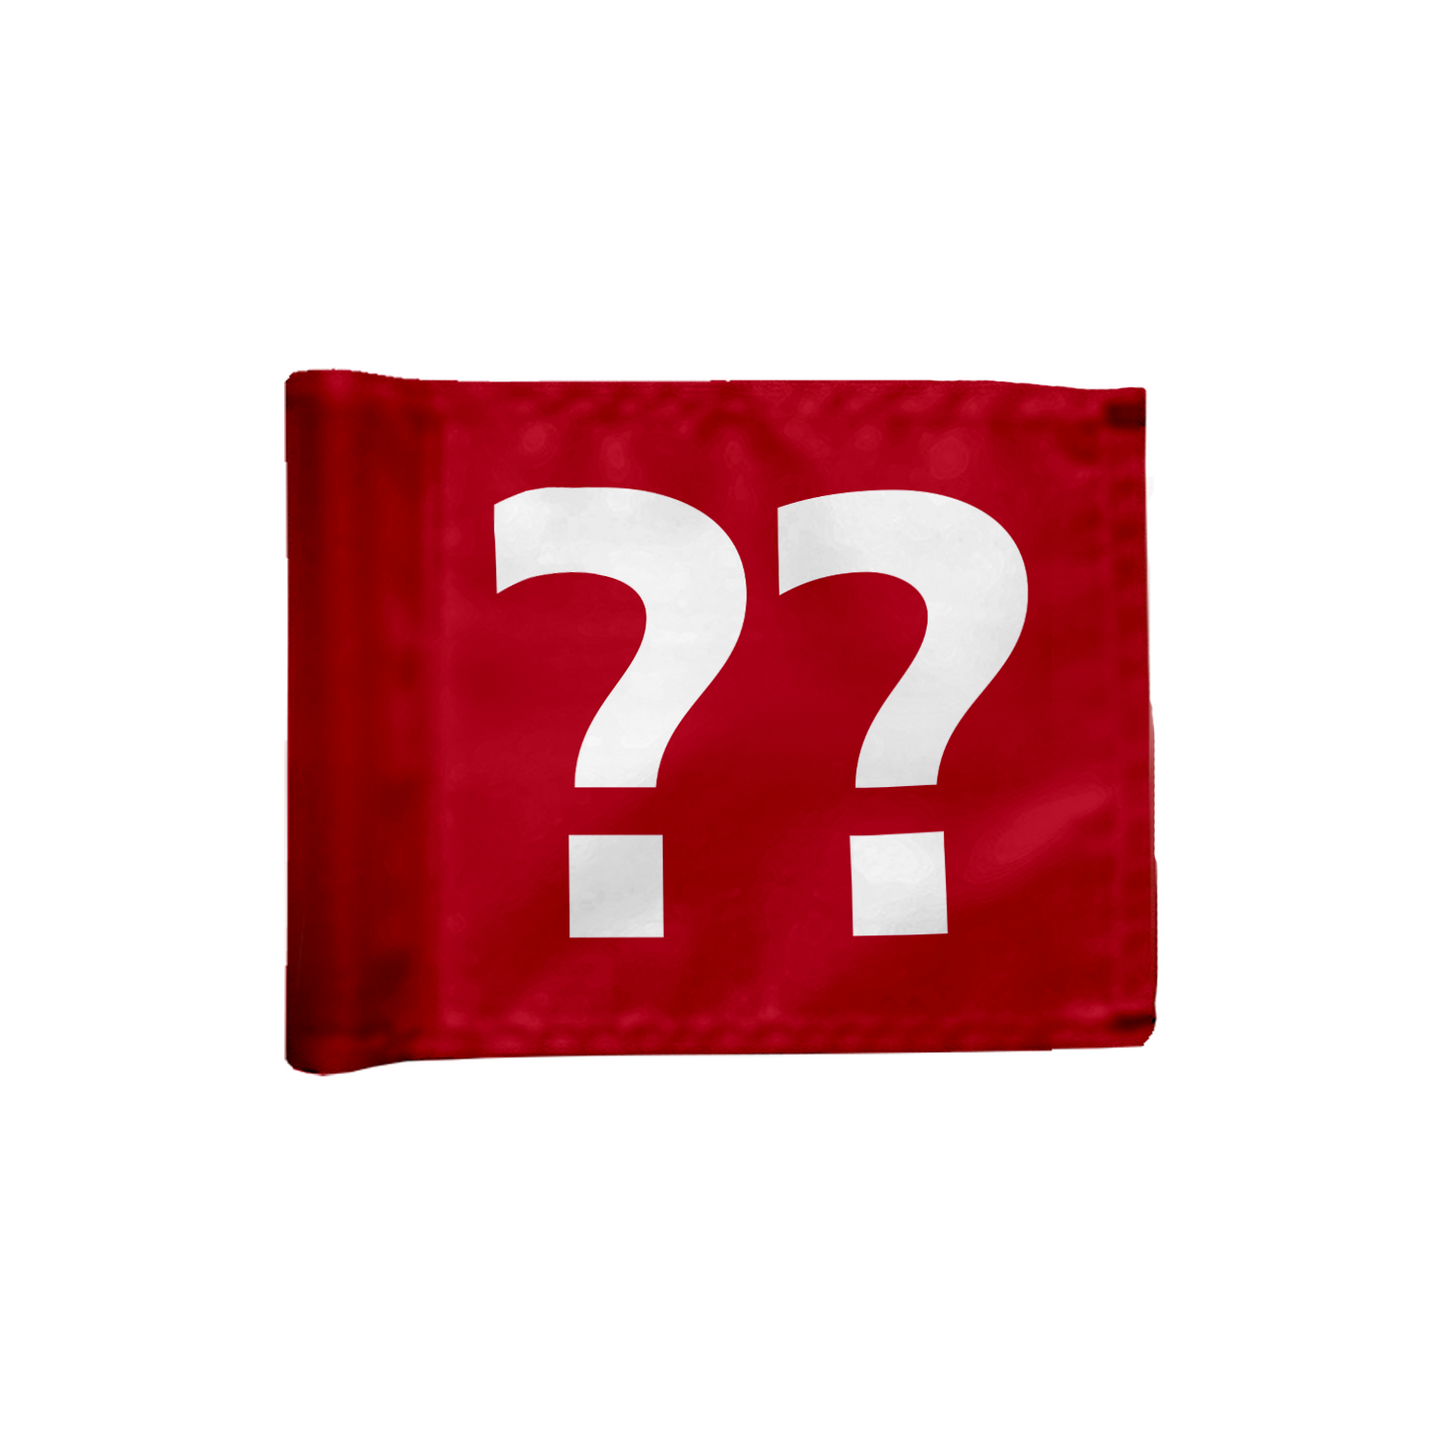 Stykvis puttinggreenflag, afstivetr, i rød med valgfrit hulnummerl, 200 gram flagdug